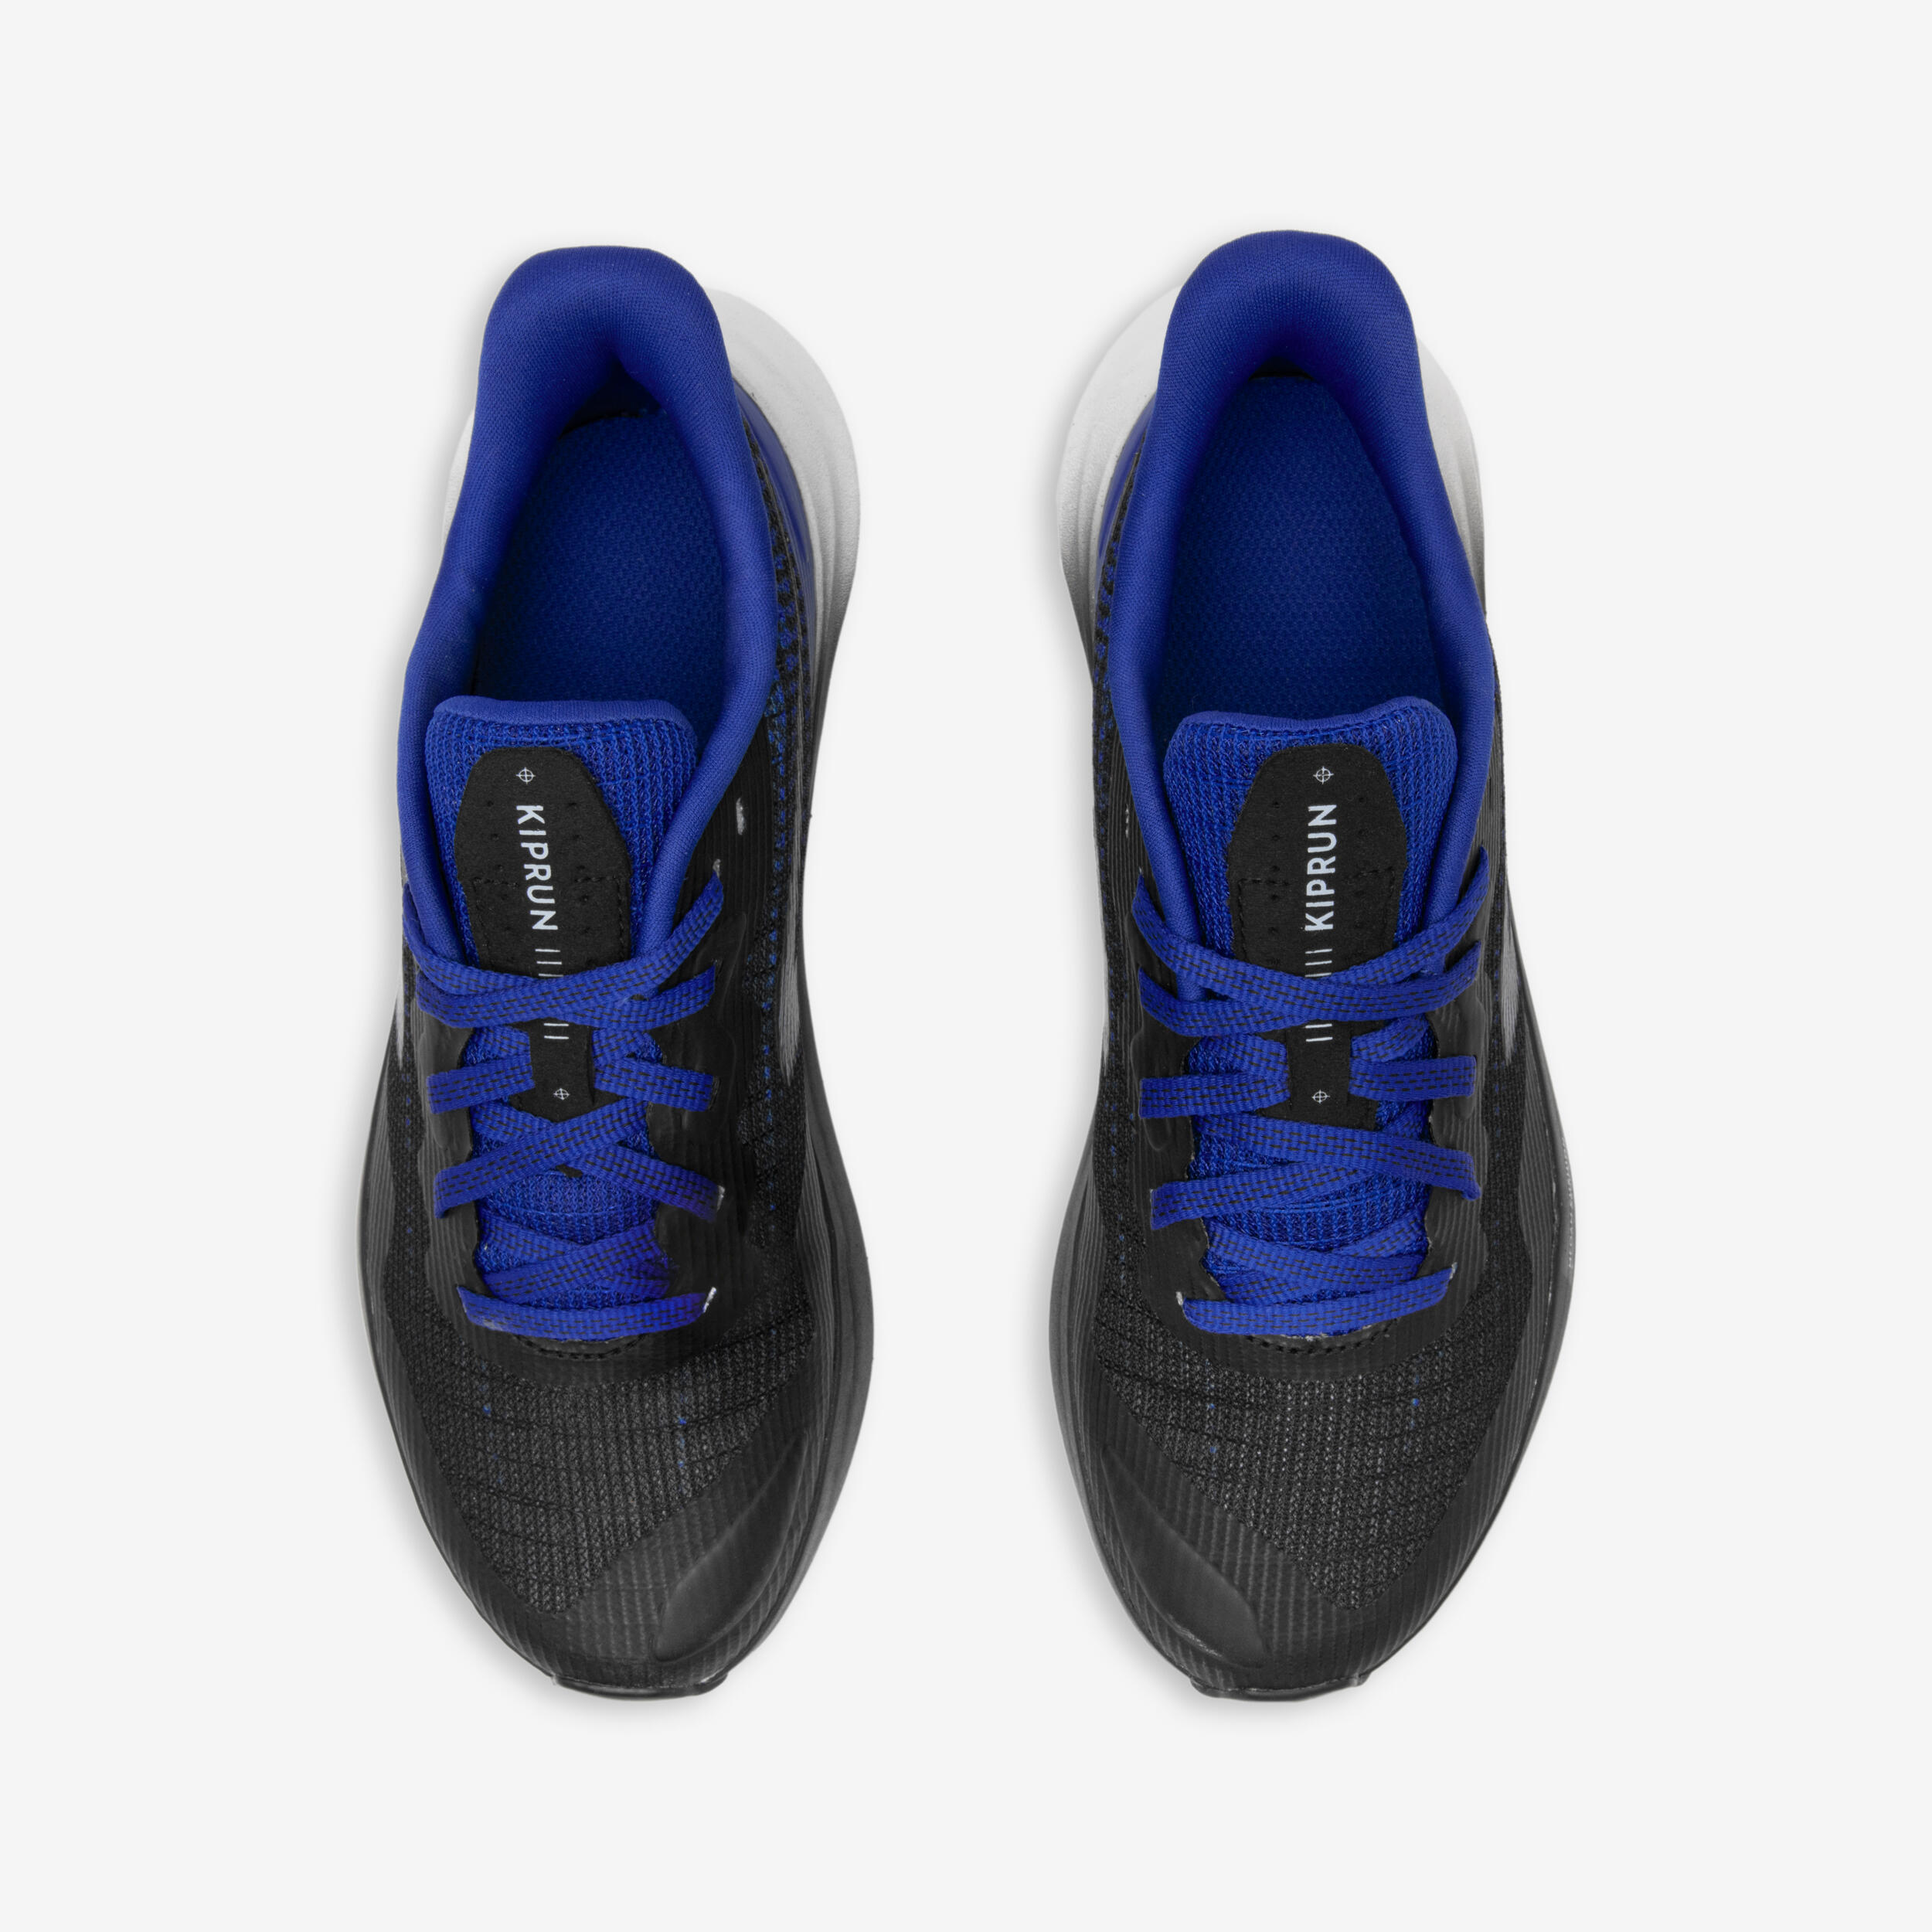 Kids' KIPRUN K500 FAST running shoes - black and blue 7/8